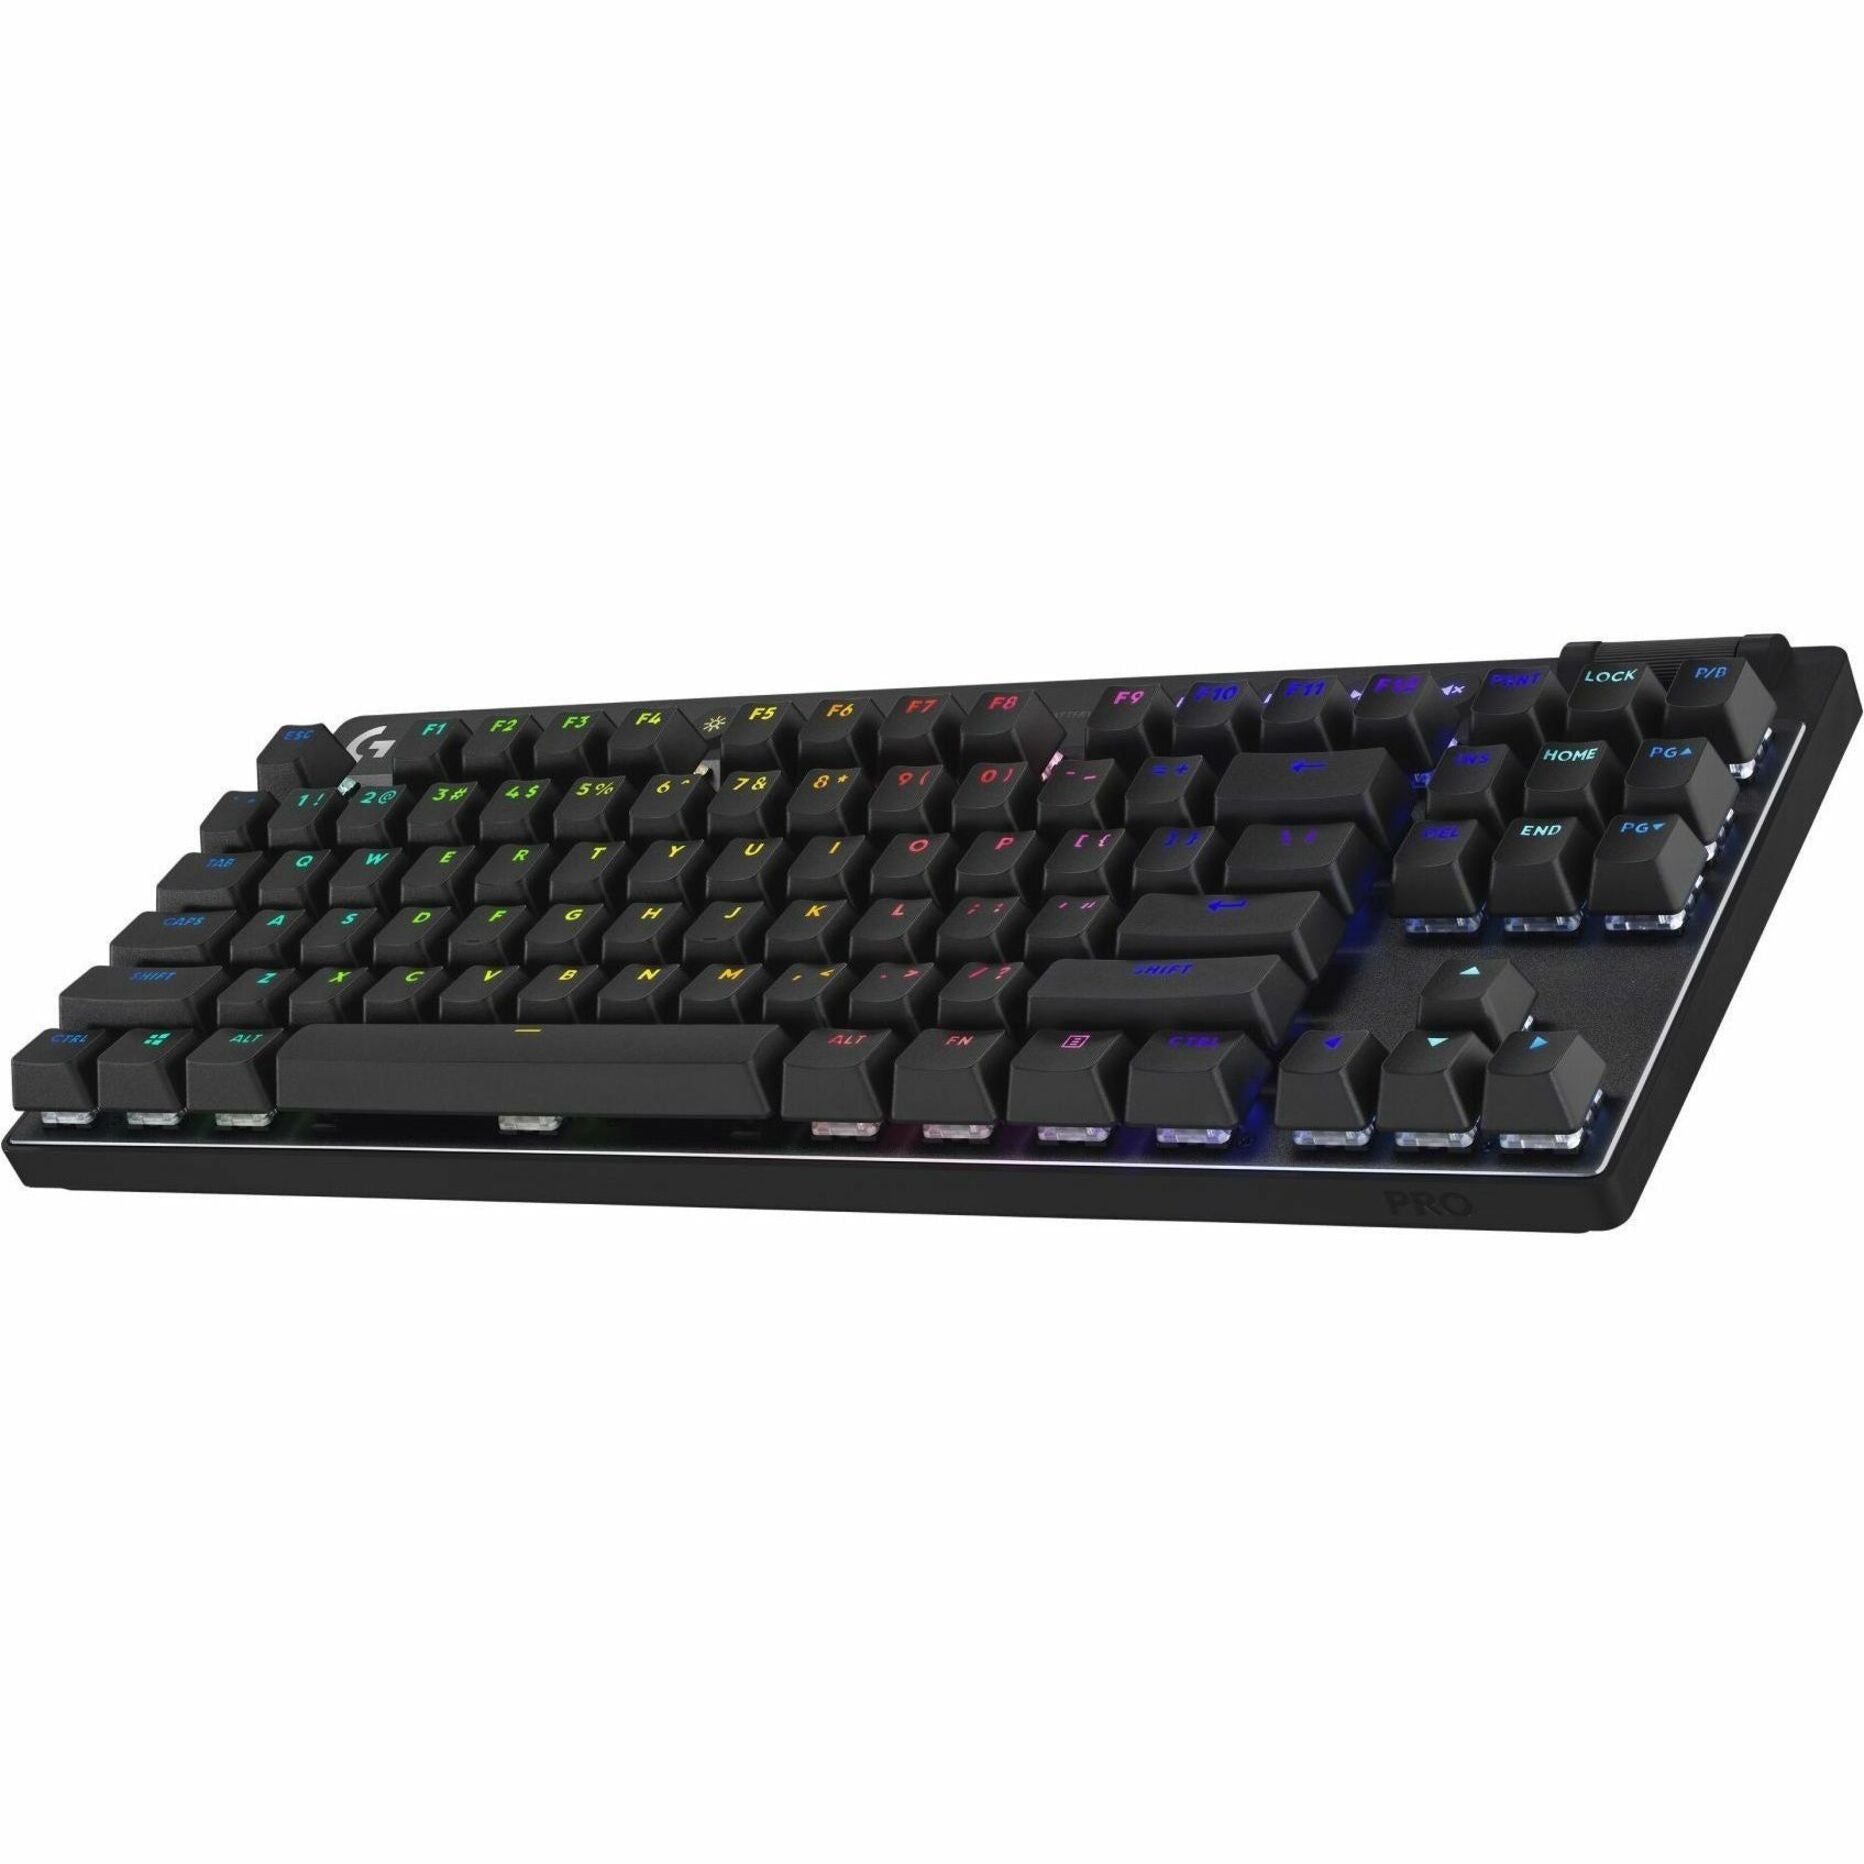 Logitech G 920-012122 PRO X TKL Gaming Keyboard, Rechargeable, RGB LED Backlight, Wireless Bluetooth, Volume Control Knob